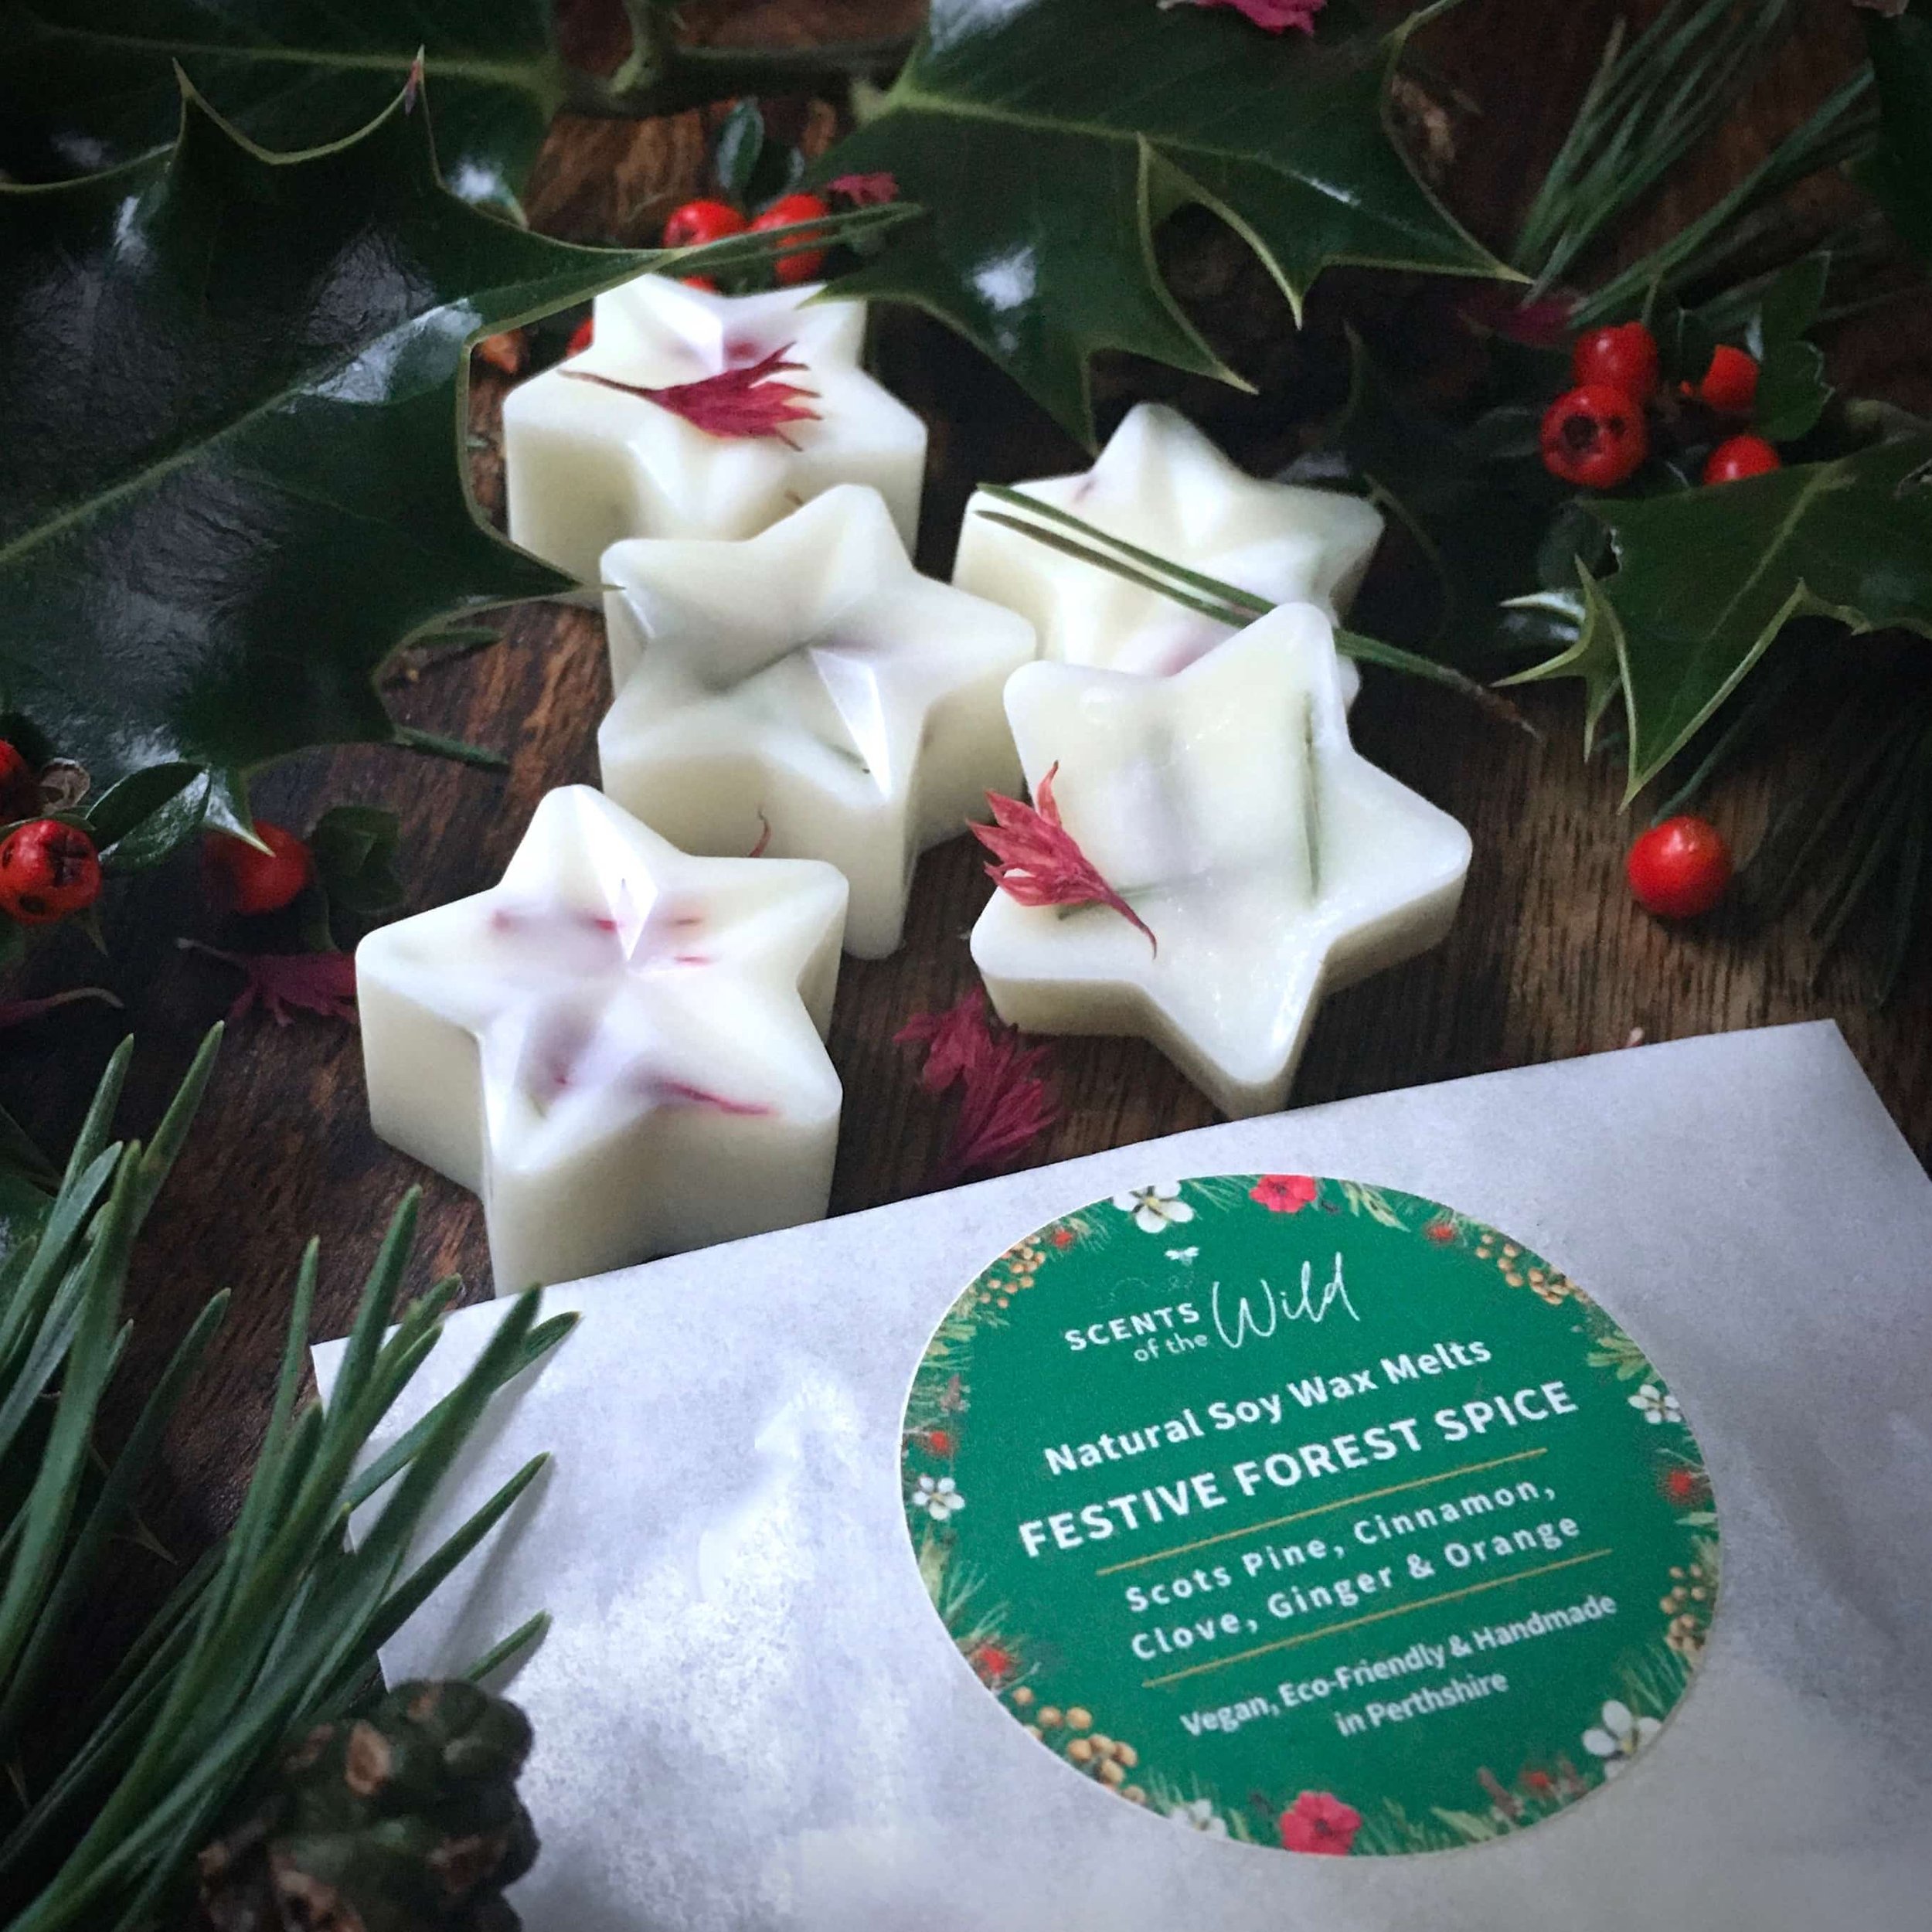 Festive Forest Spice natural Christmas wax melt stars.jpg